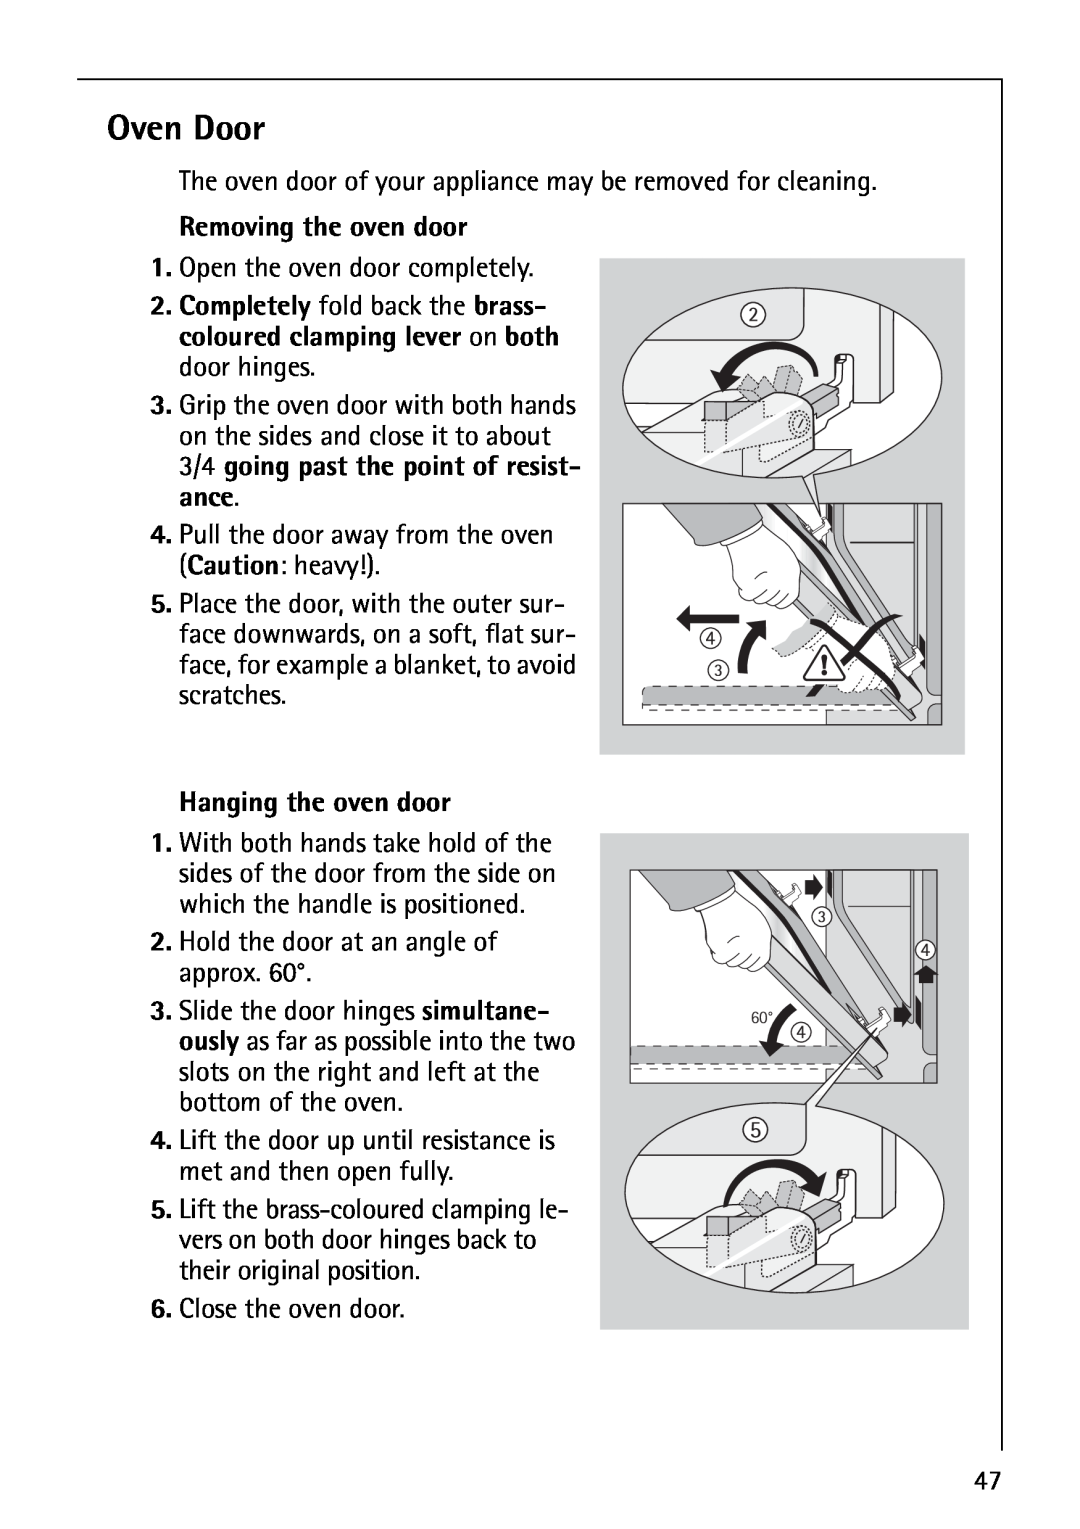 AEG B4130-1 operating instructions Oven Door, Removing the oven door, Hanging the oven door 